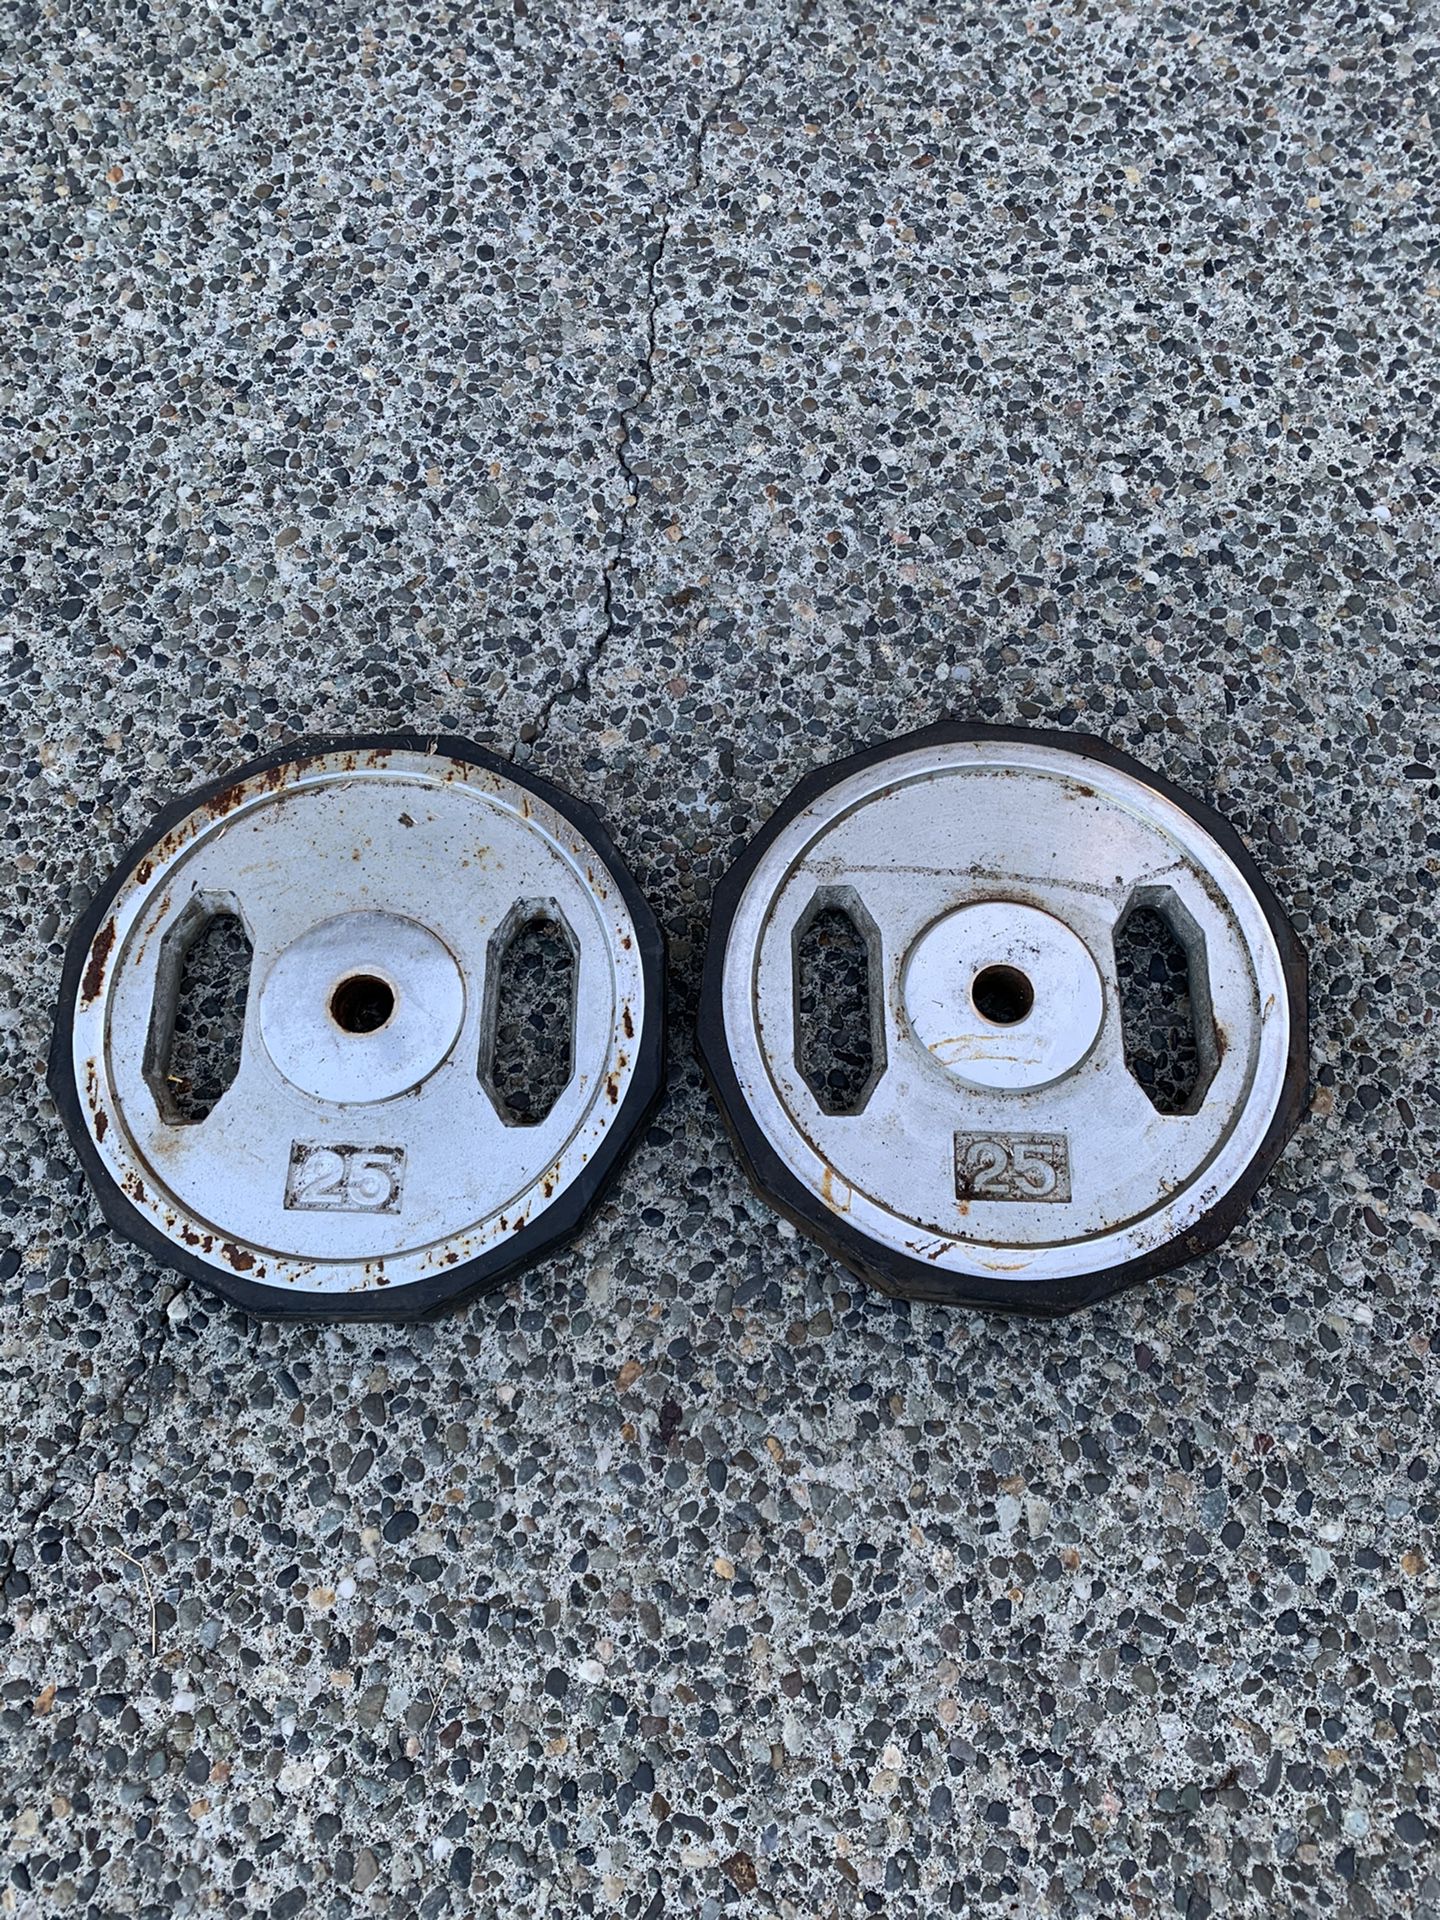 25lb Rubber Bumper Plates Pair (50lb of Weight)